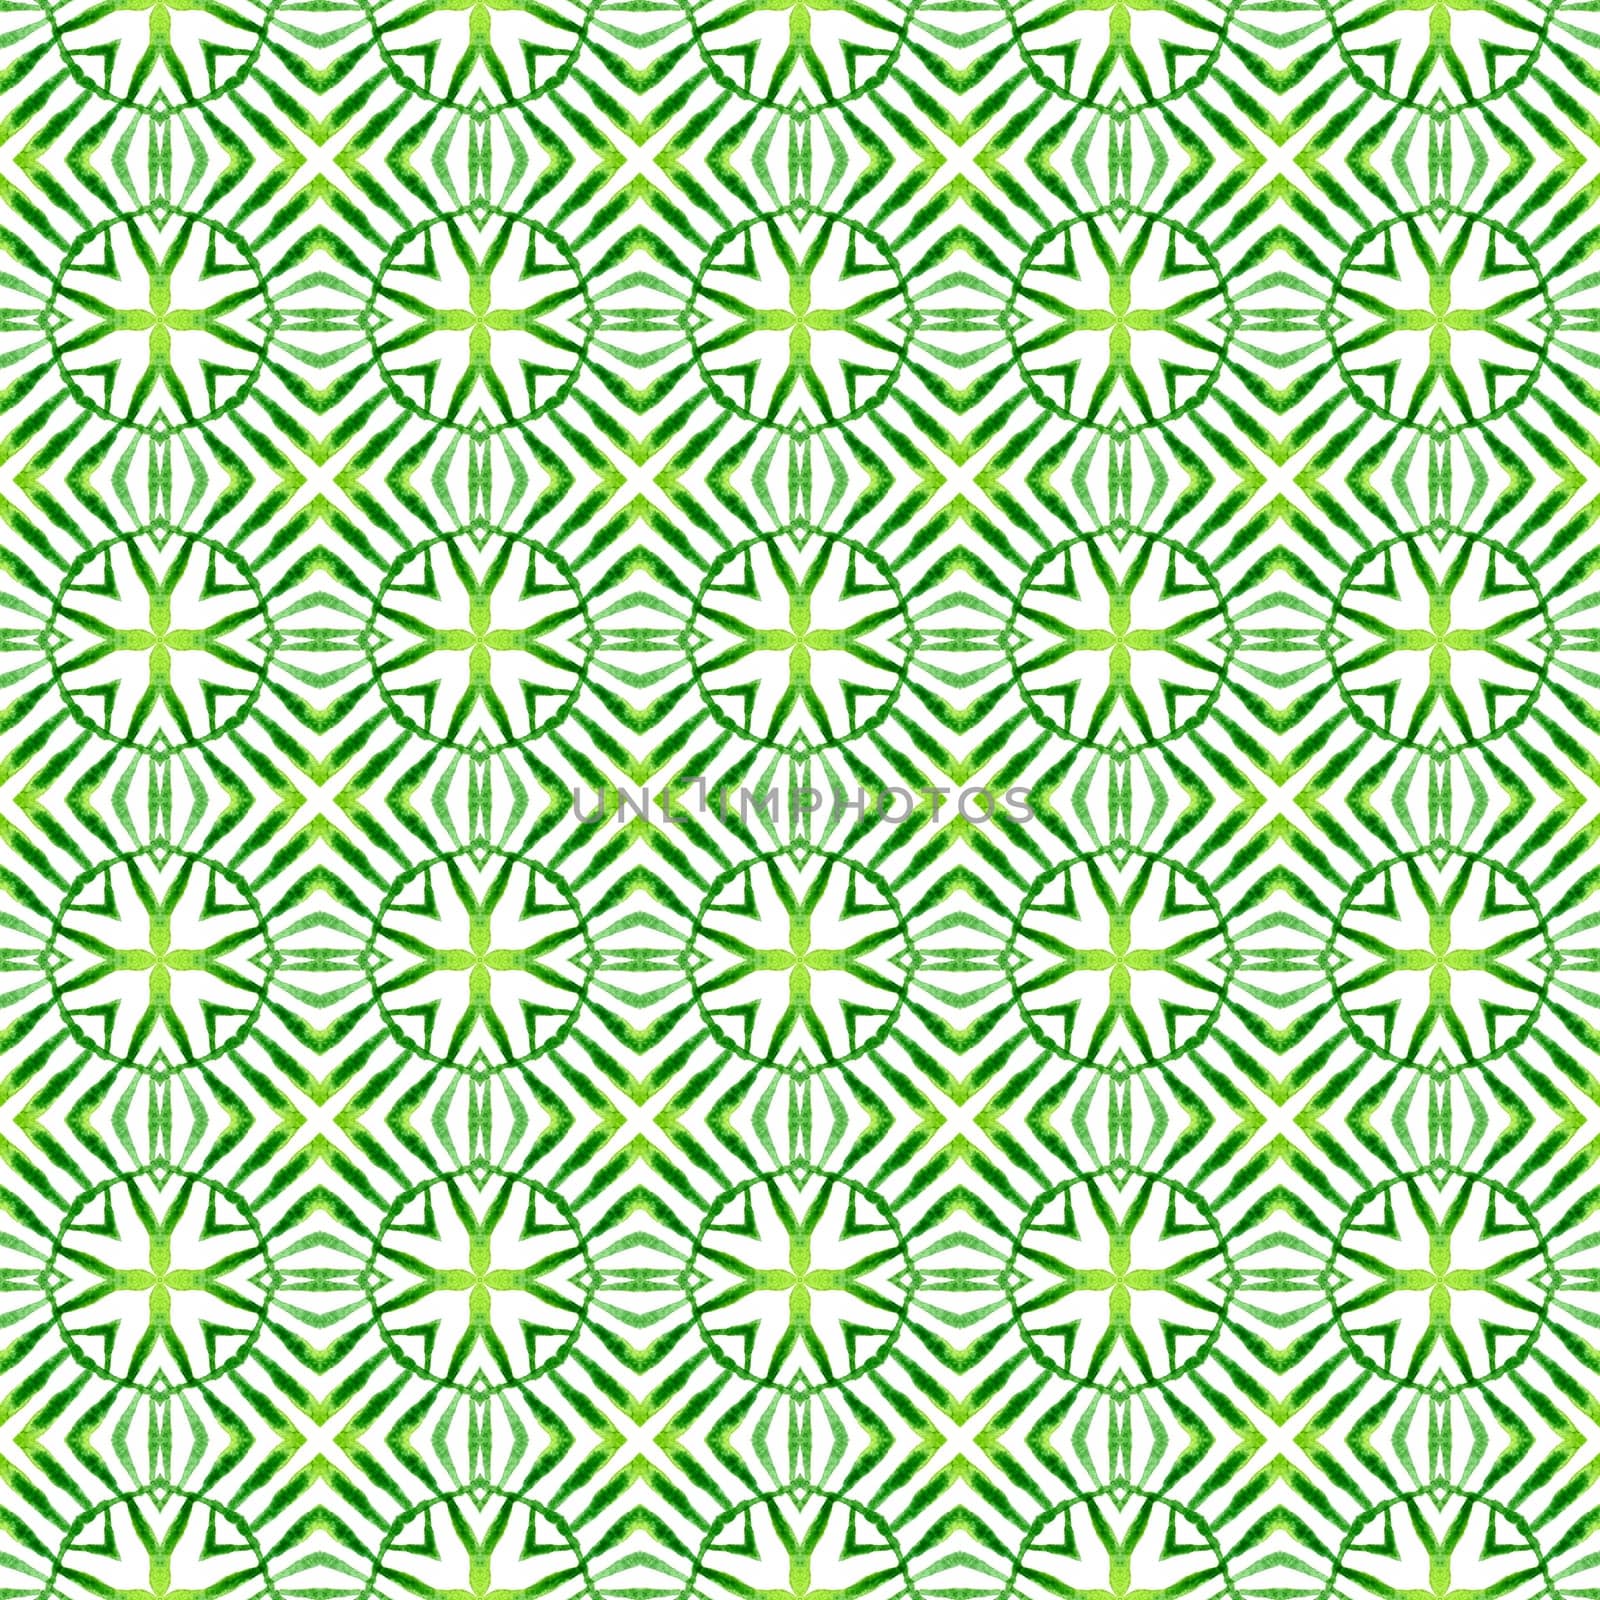 Organic tile. Green trending boho chic summer by beginagain